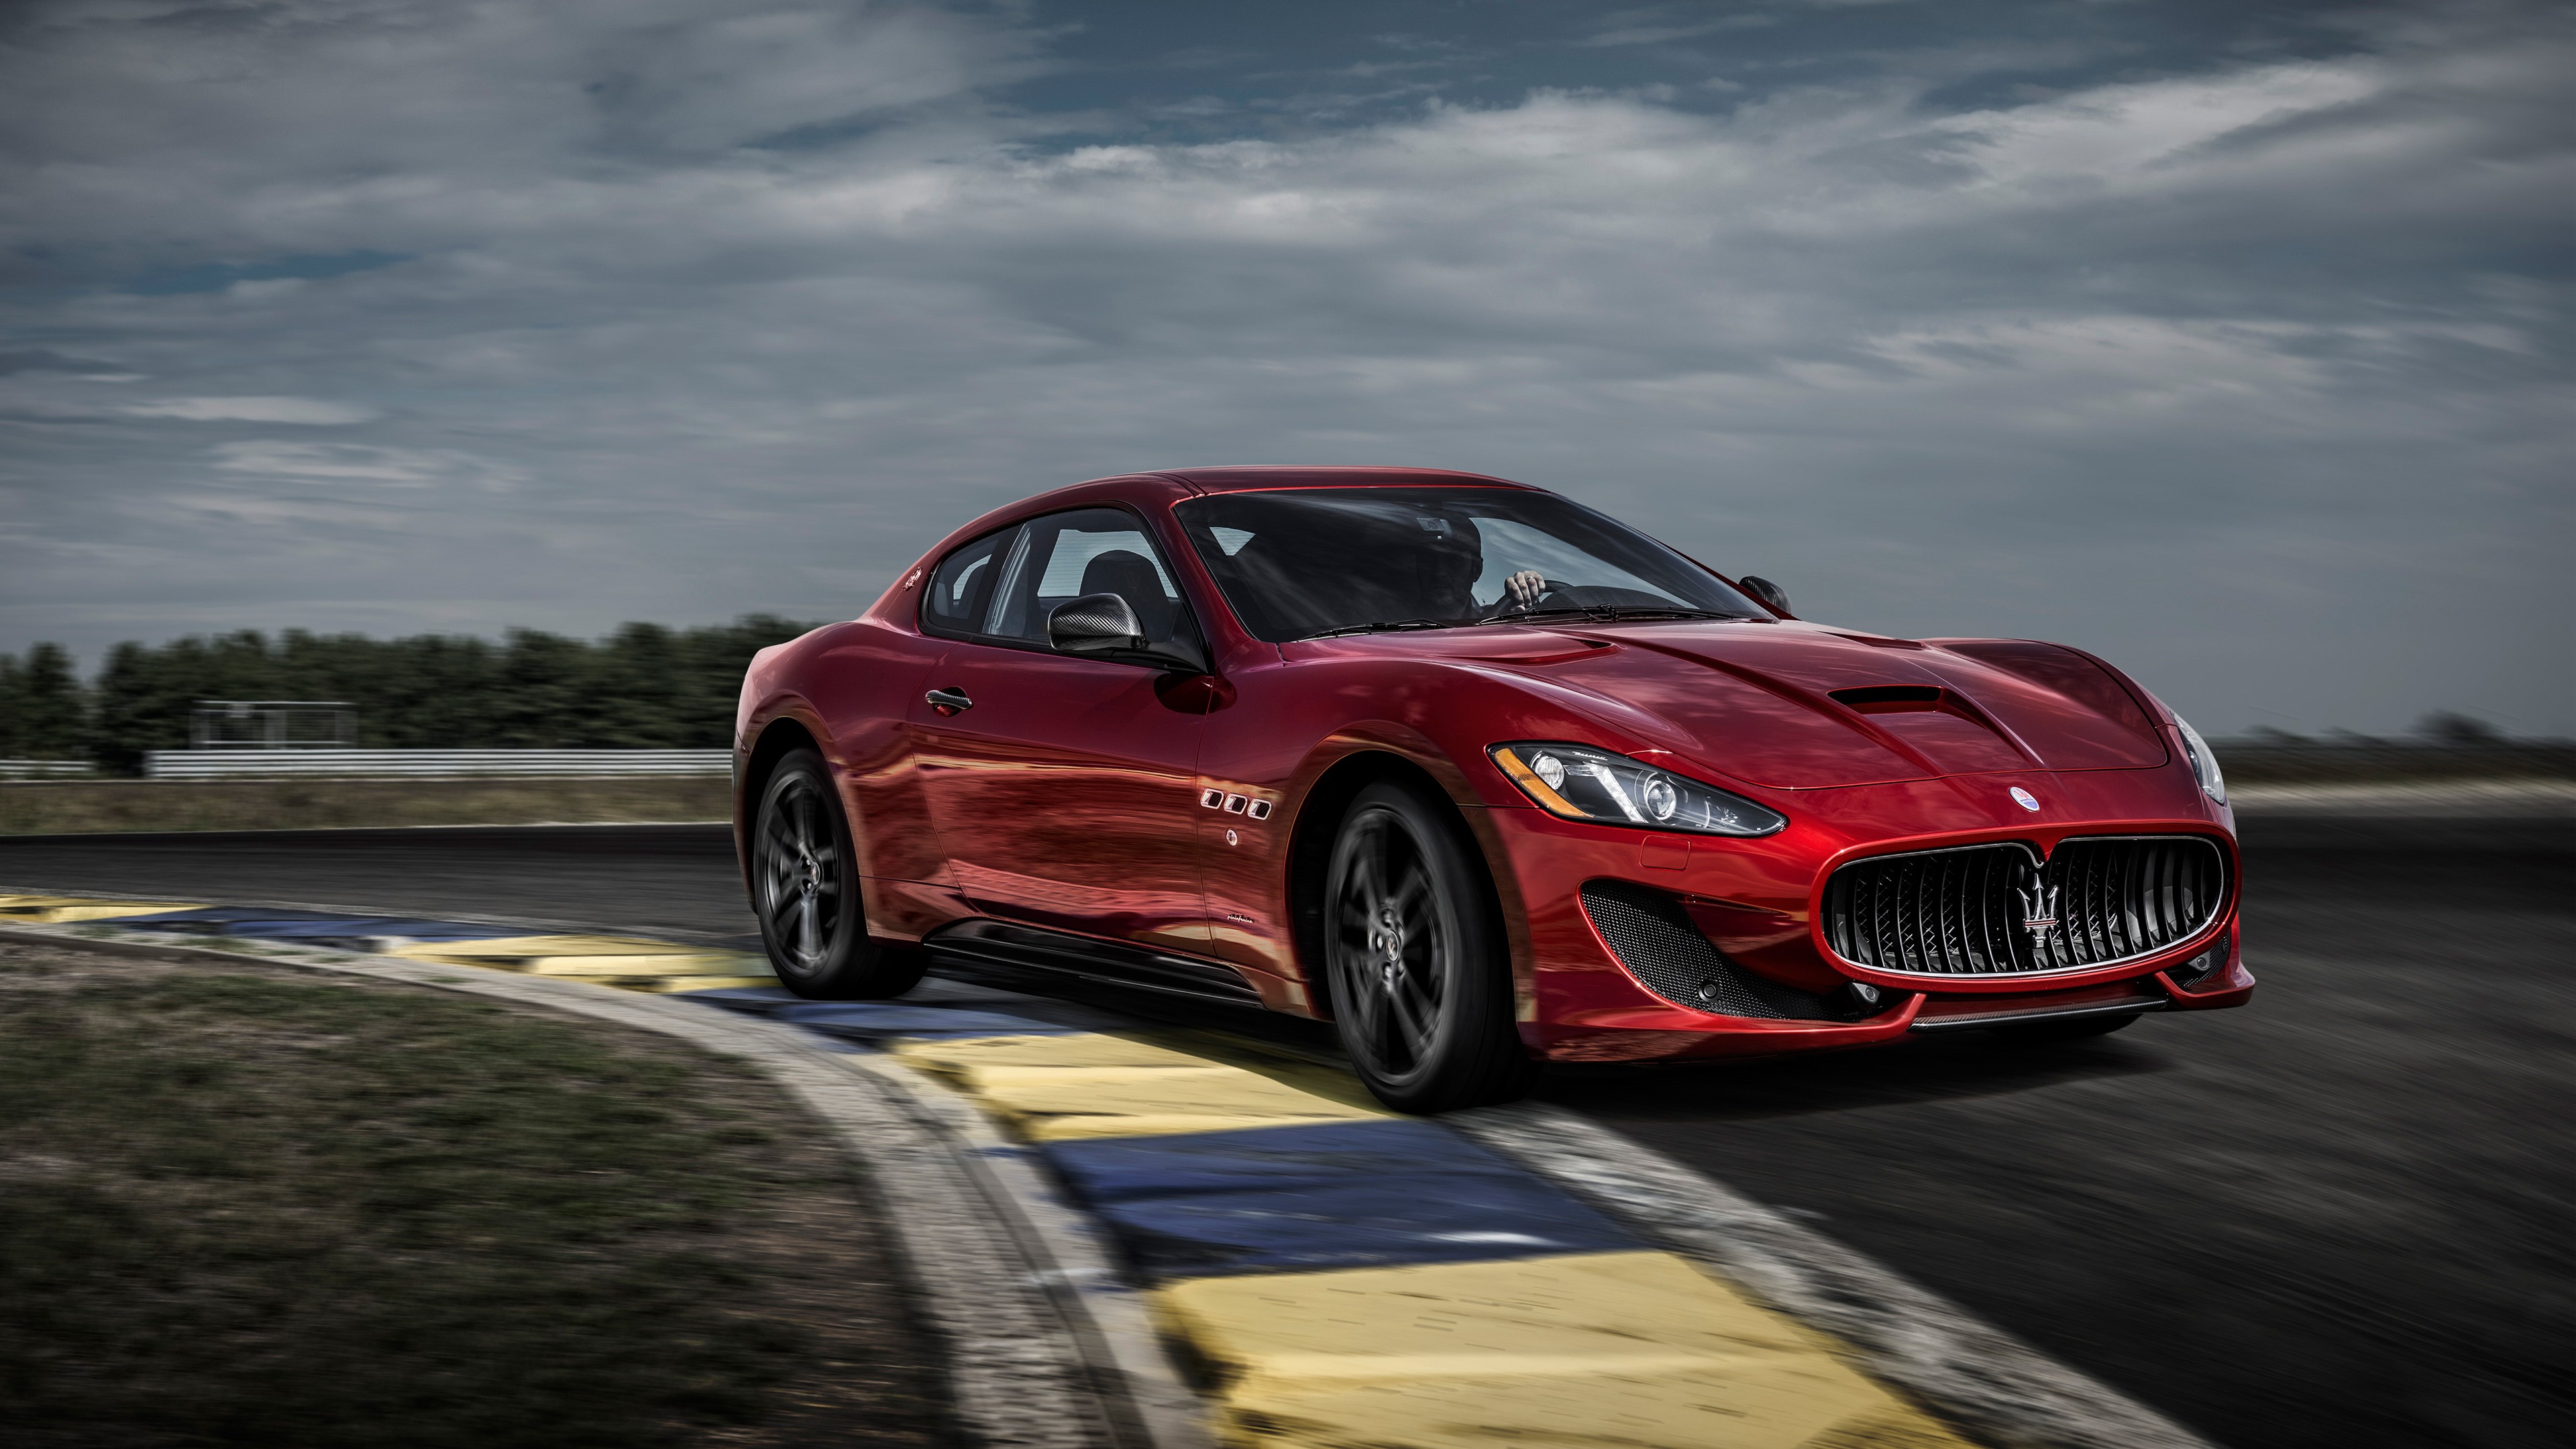 Maserati - fond d'écran 4K.jpg